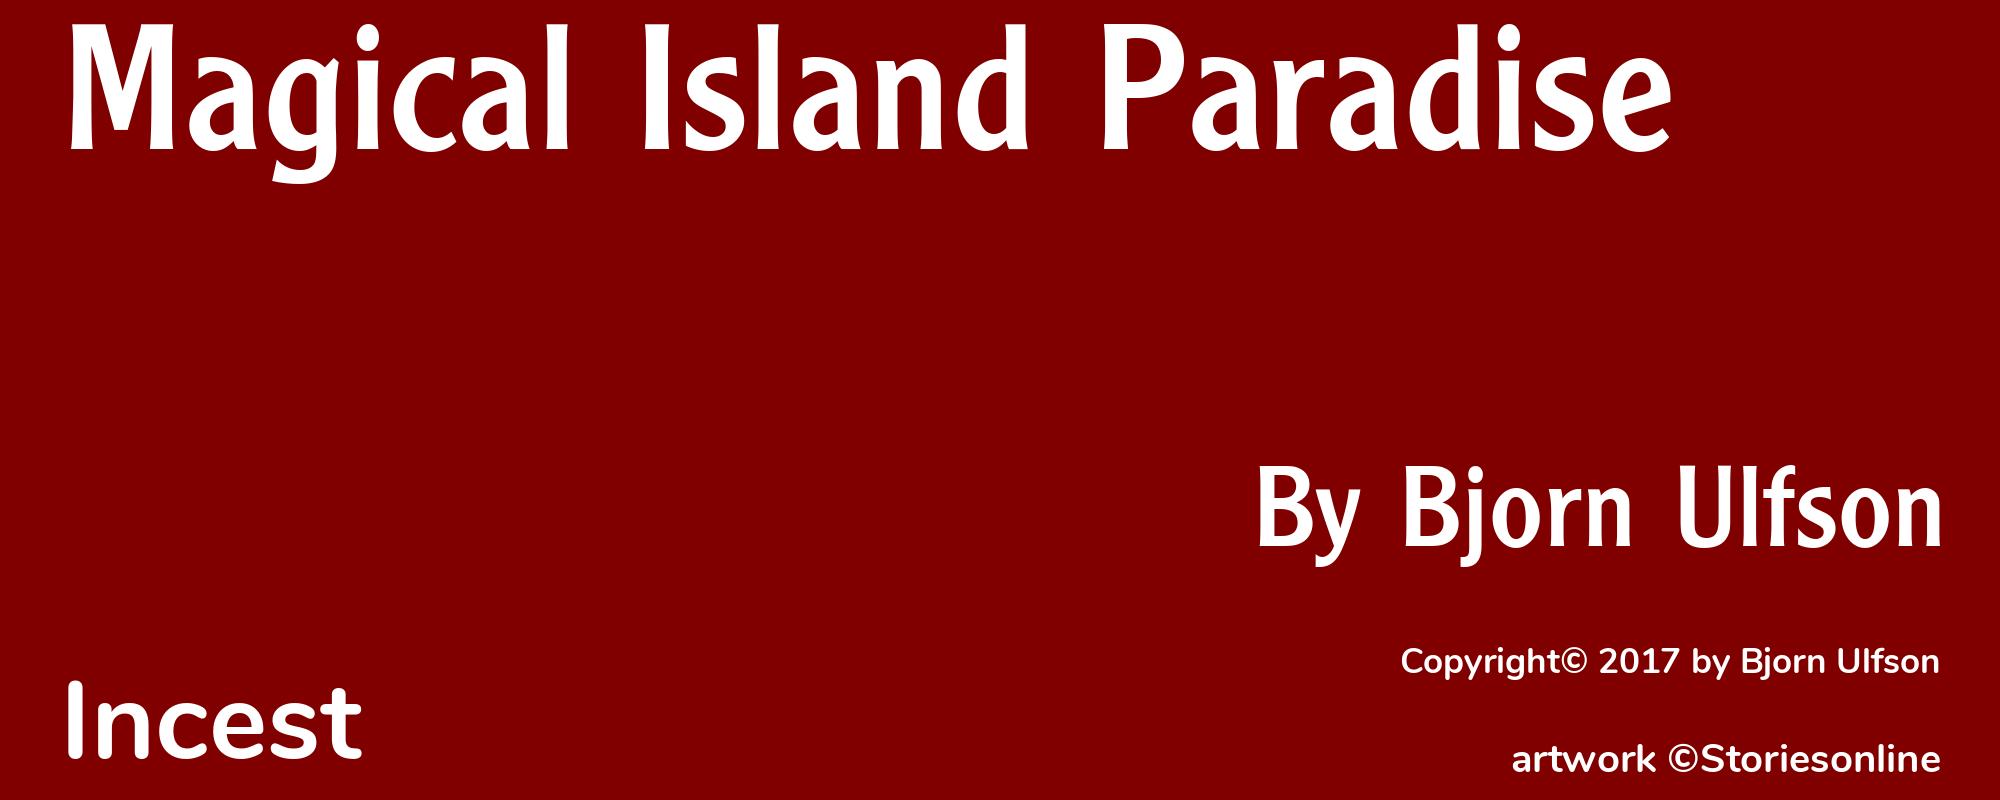 Magical Island Paradise - Cover